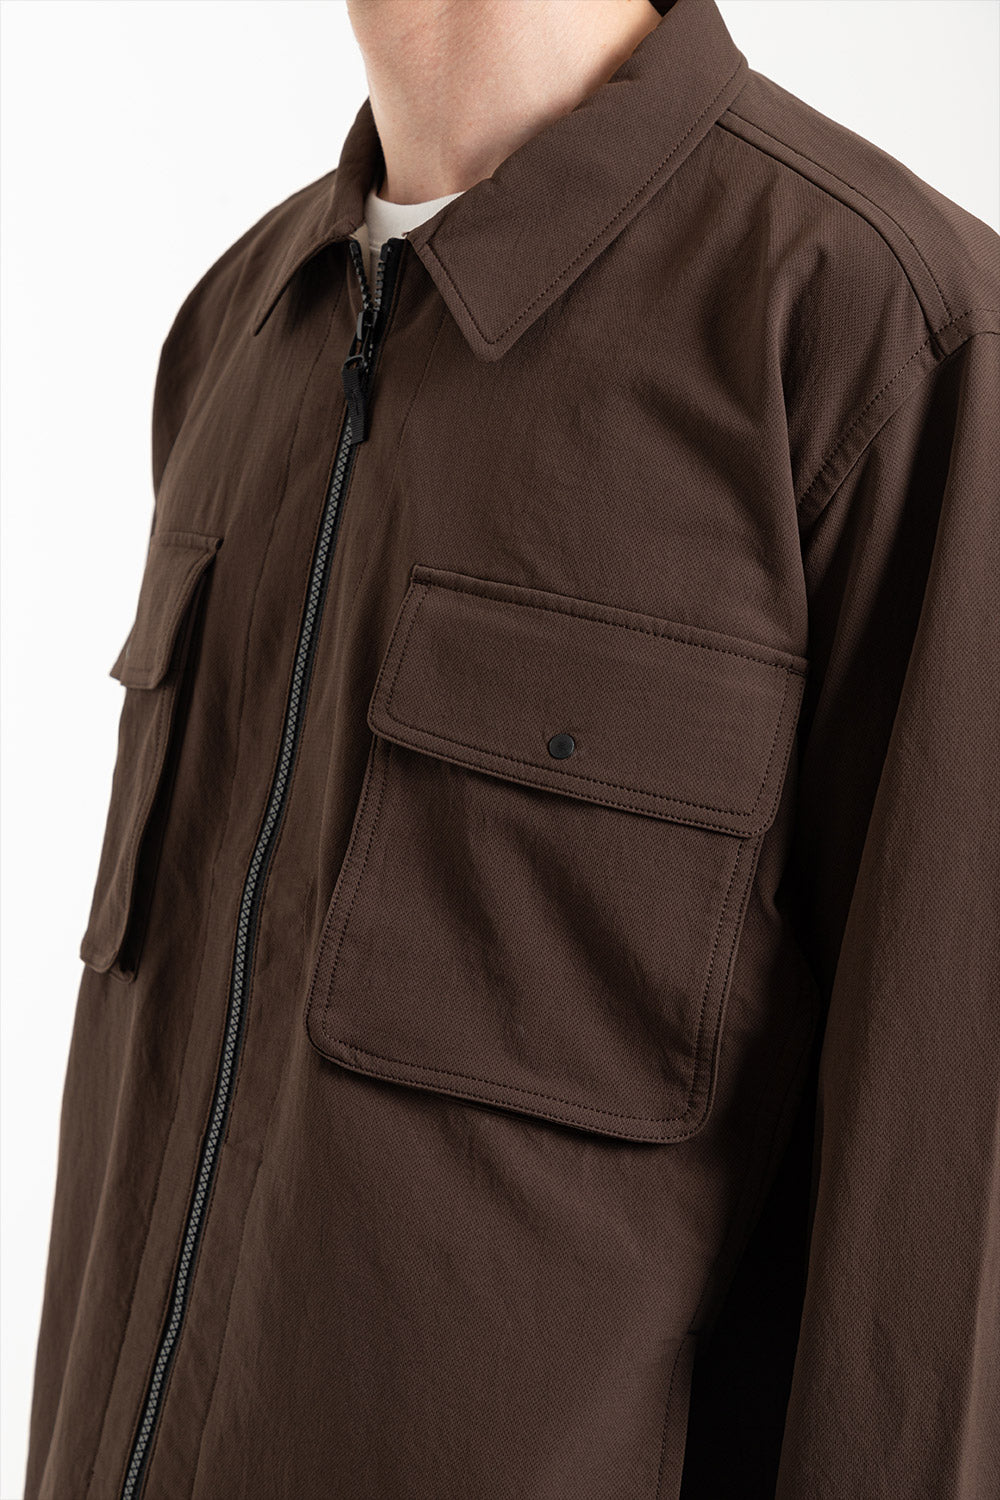 nanamica-alphadry-jacket-brown